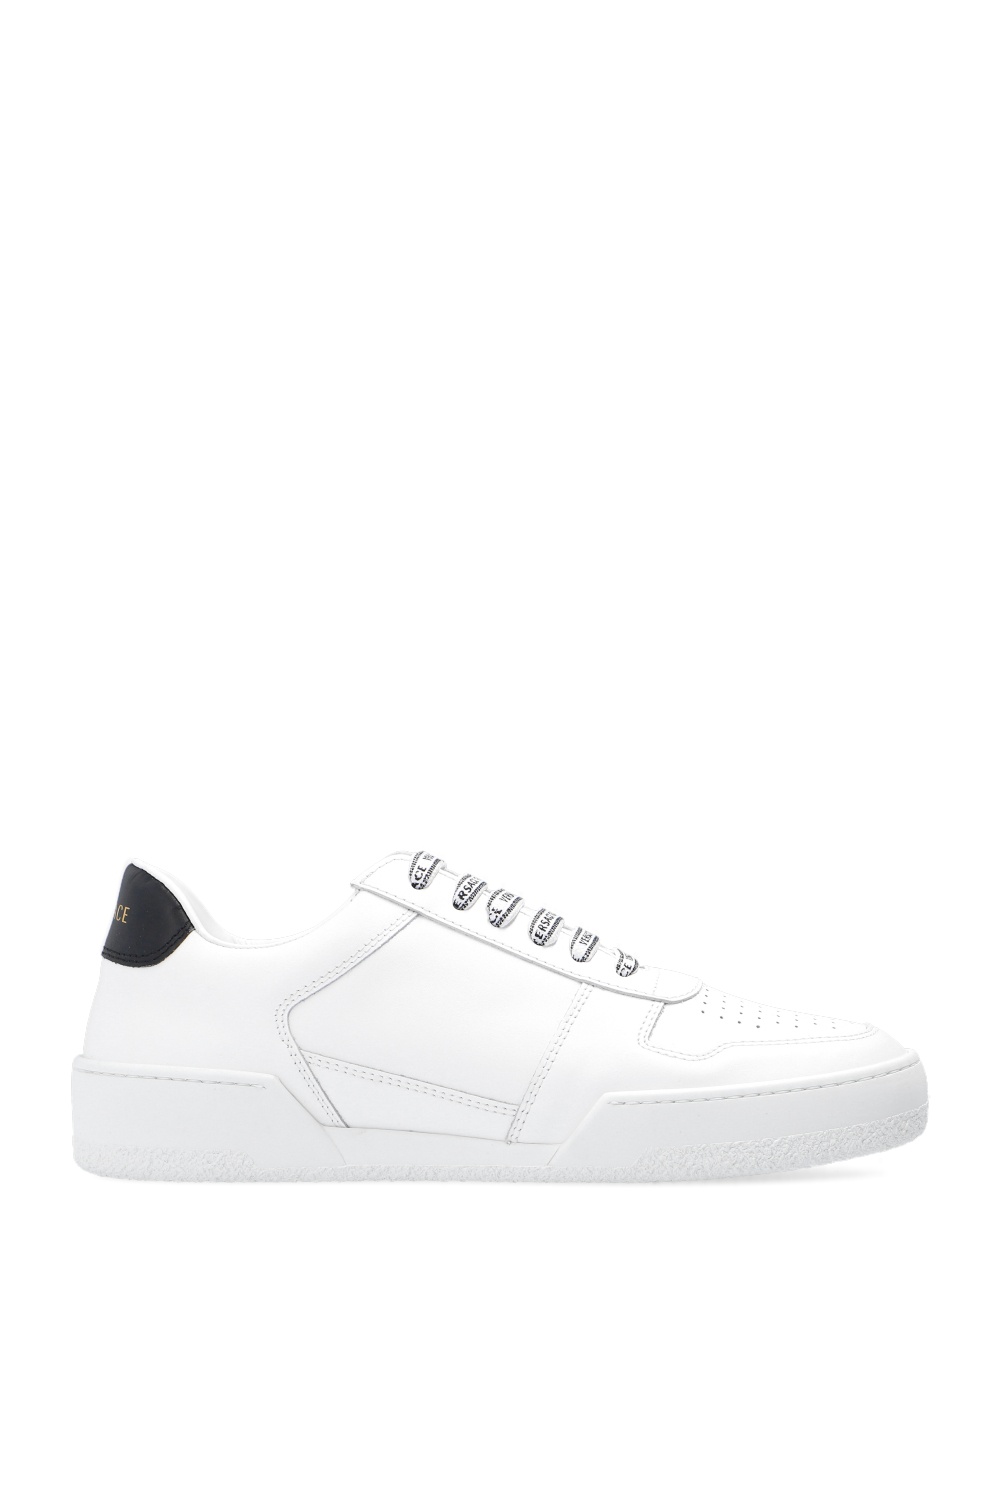 Ampere Correctly action IetpShops | Women's Shoes | Grey White Men Women Unisex Sandals Slide | Versace  adidas sneakers